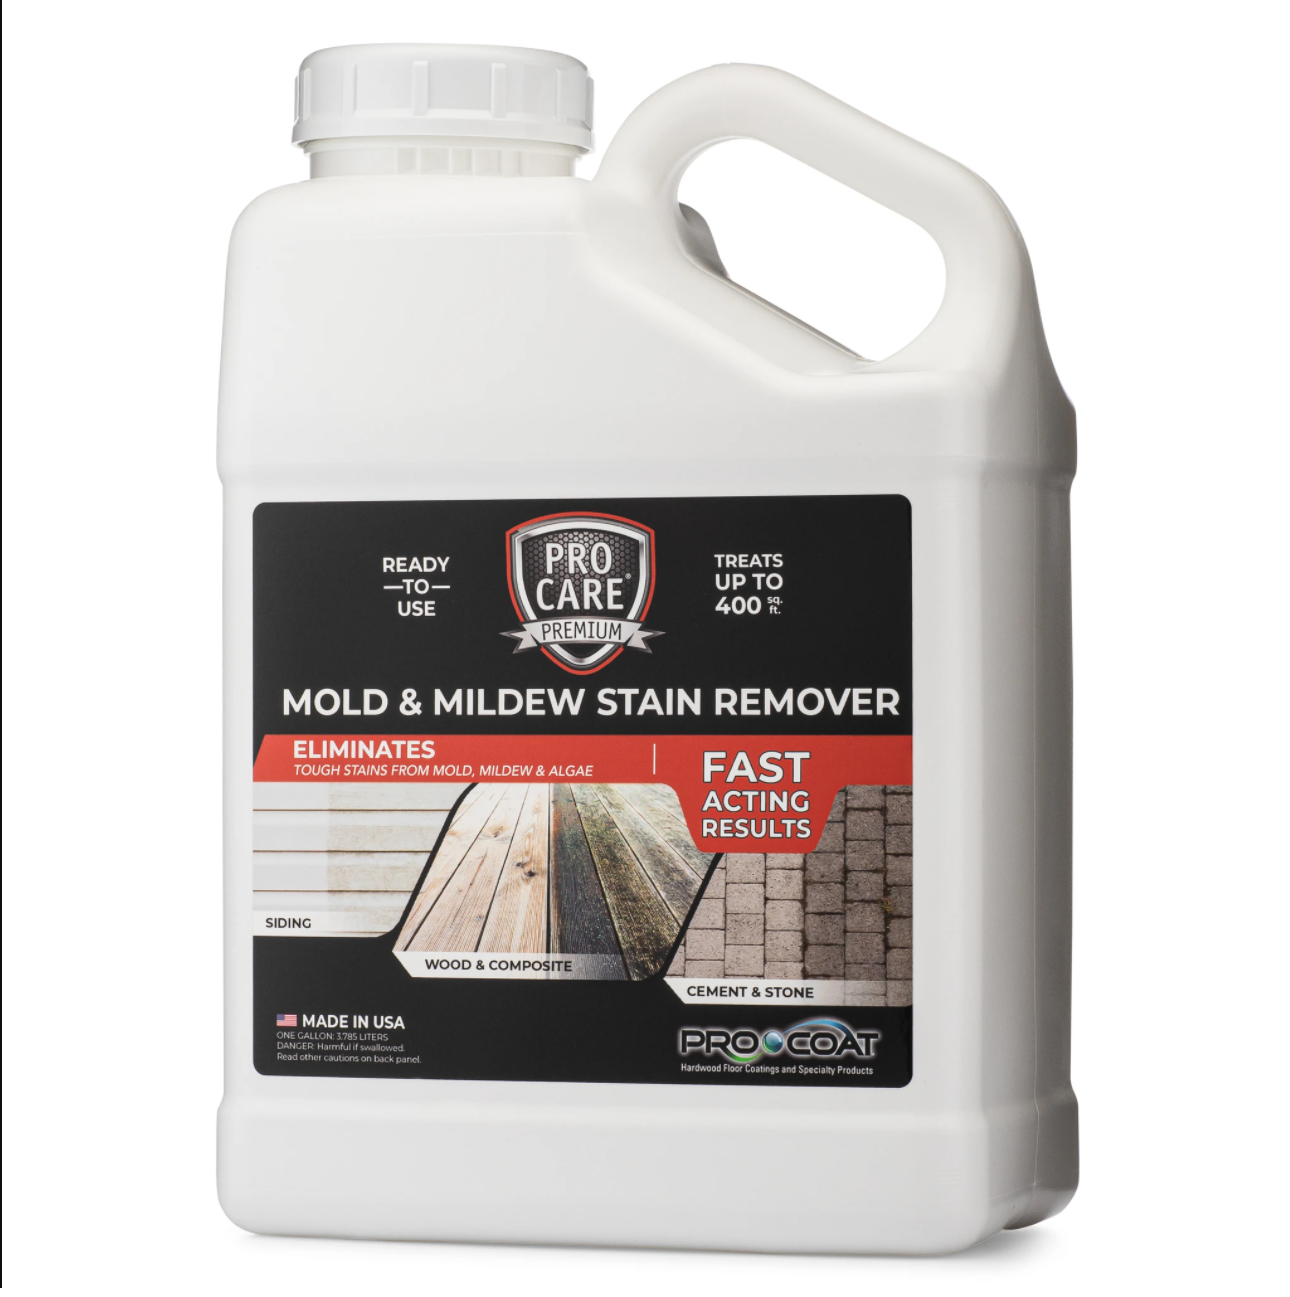 MMR mold stain remover-Attic Mold Stain Remover-Crawlspace Mold